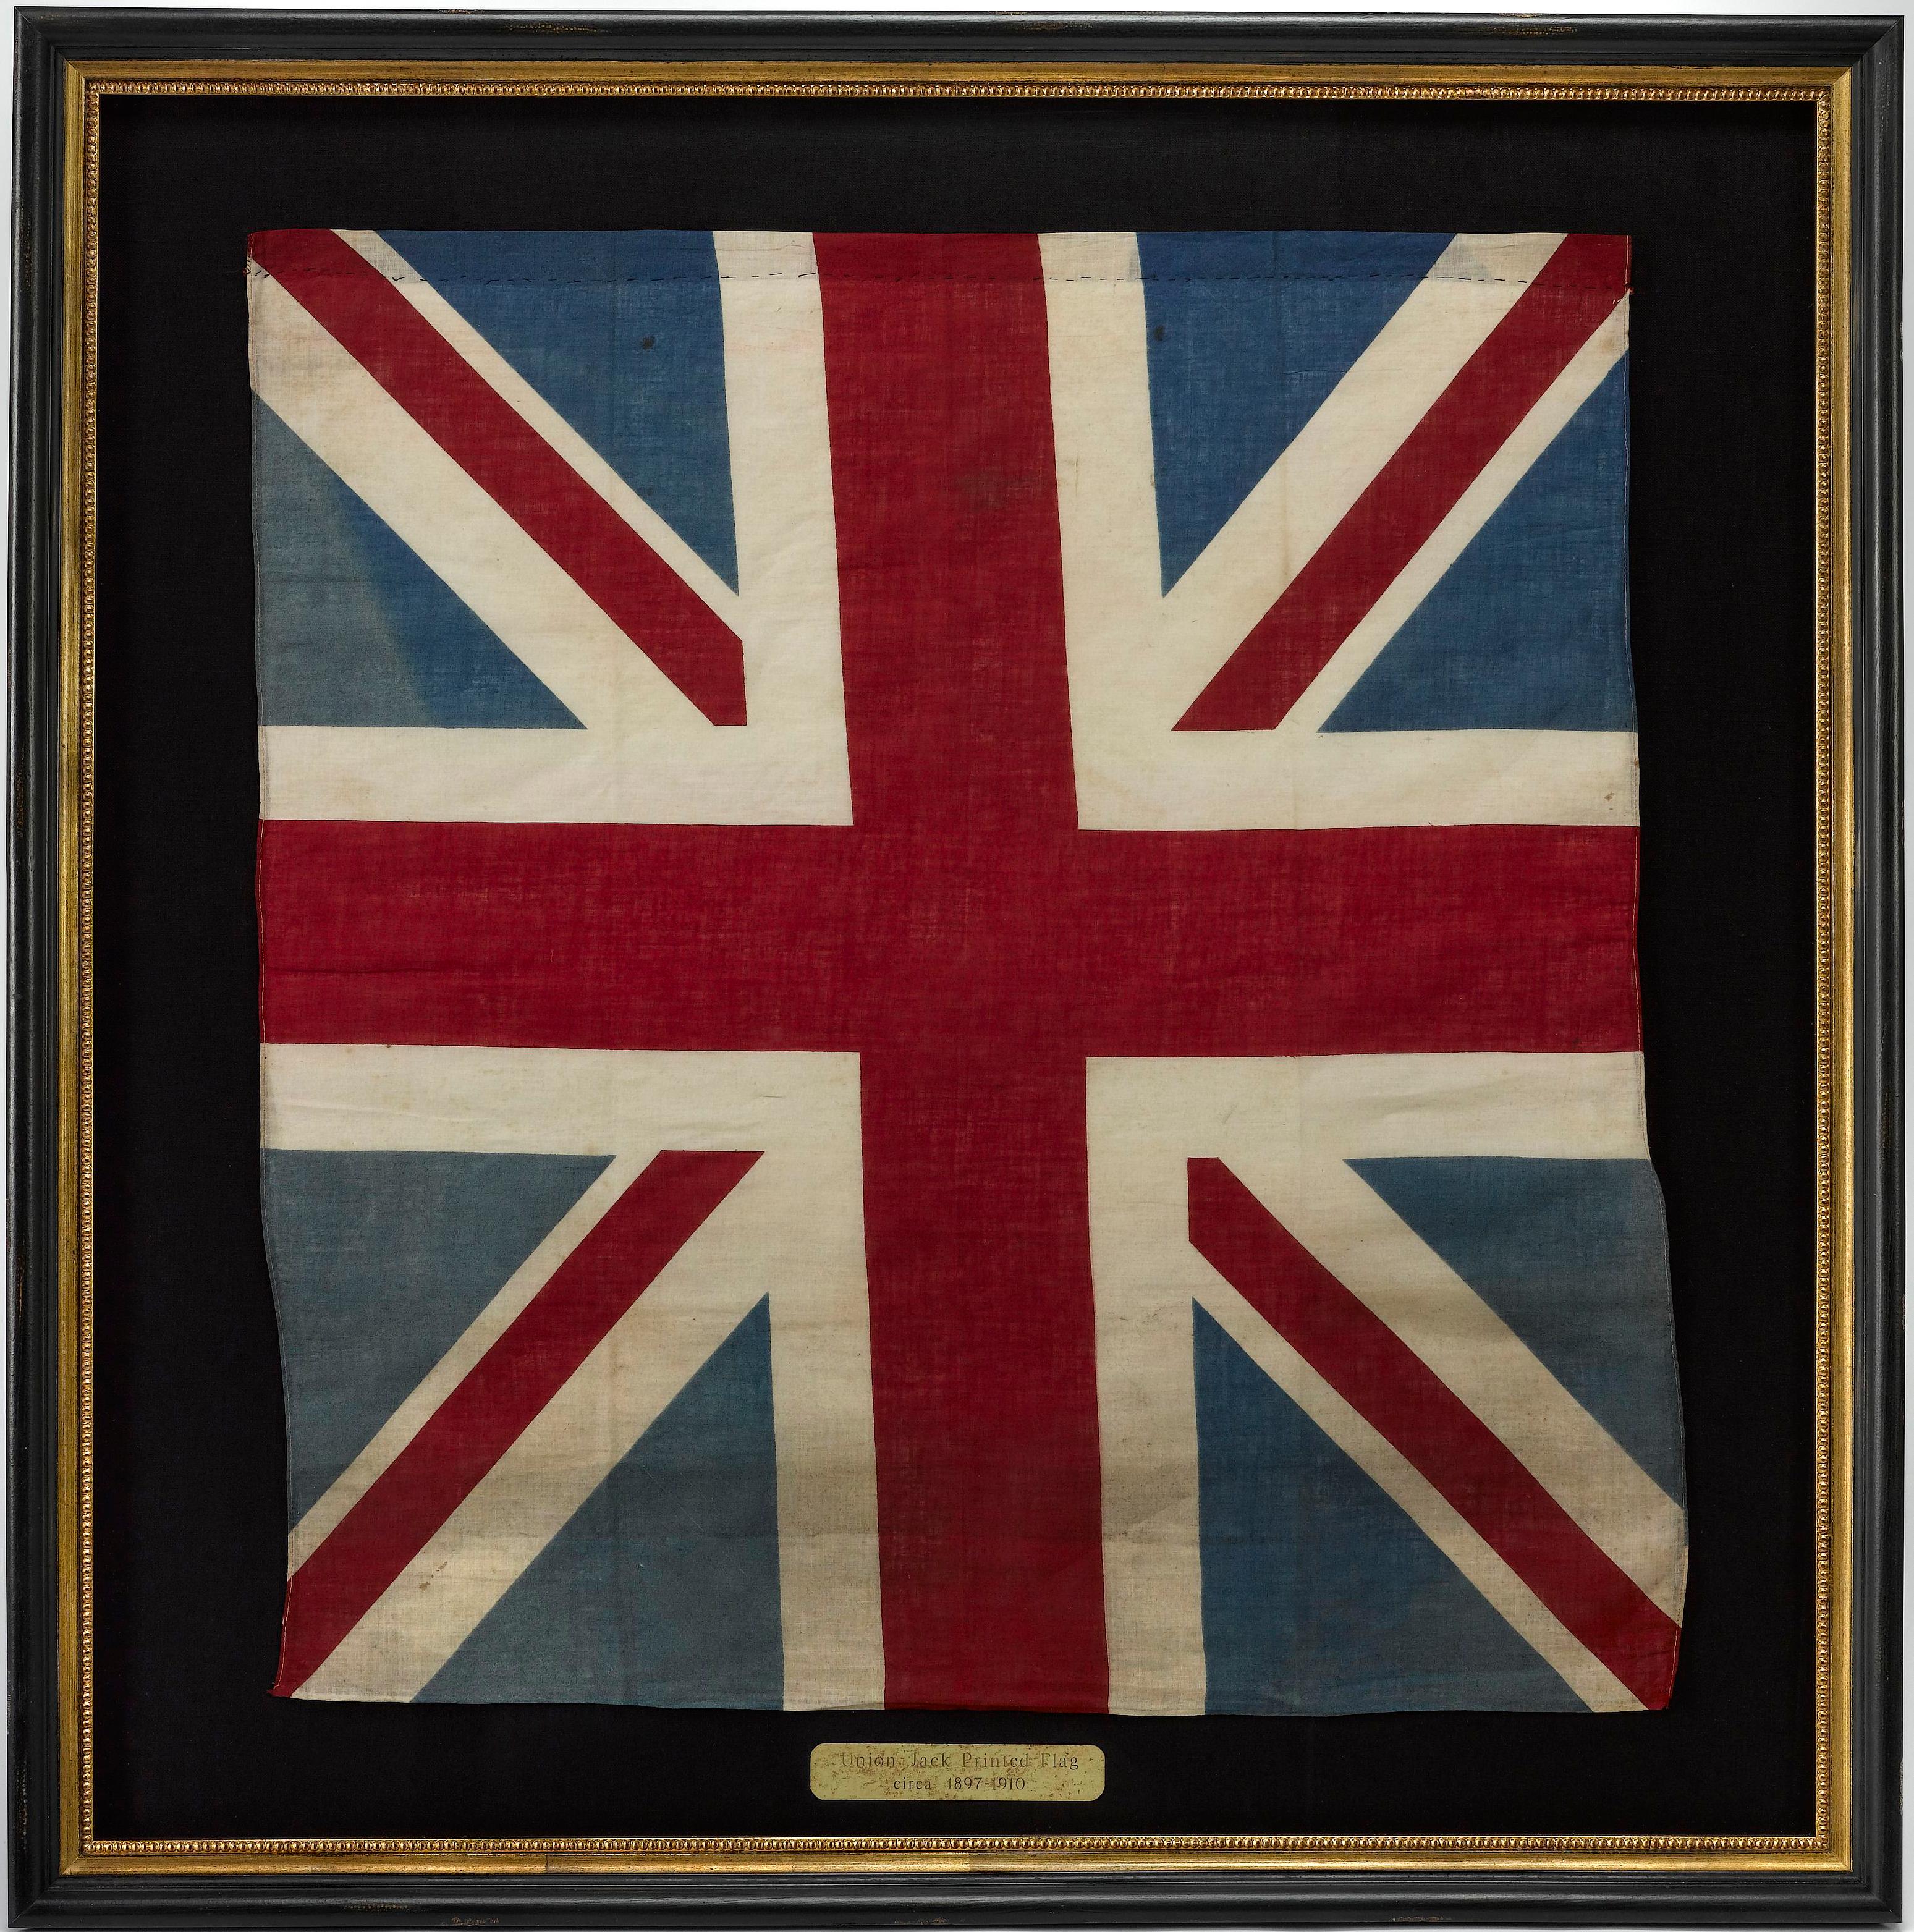 Early 20th Century Union Jack Printed Flag, circa 1897-1910